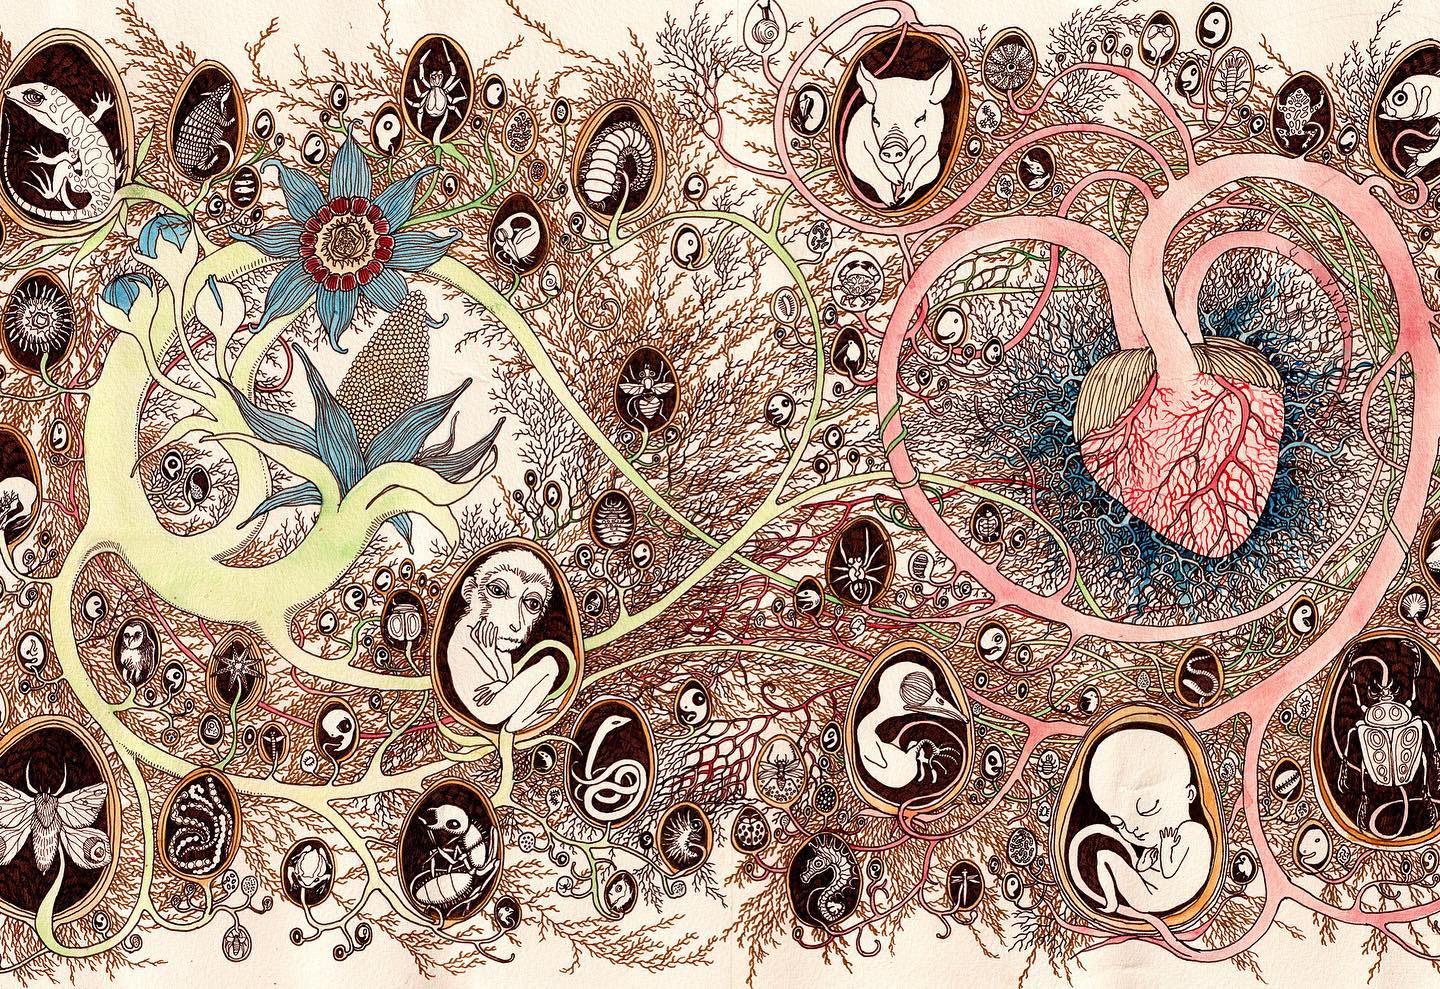 Enchanting Realms: Nature, Fantasy, and the Poetic Illustratons of Magda Boreysza